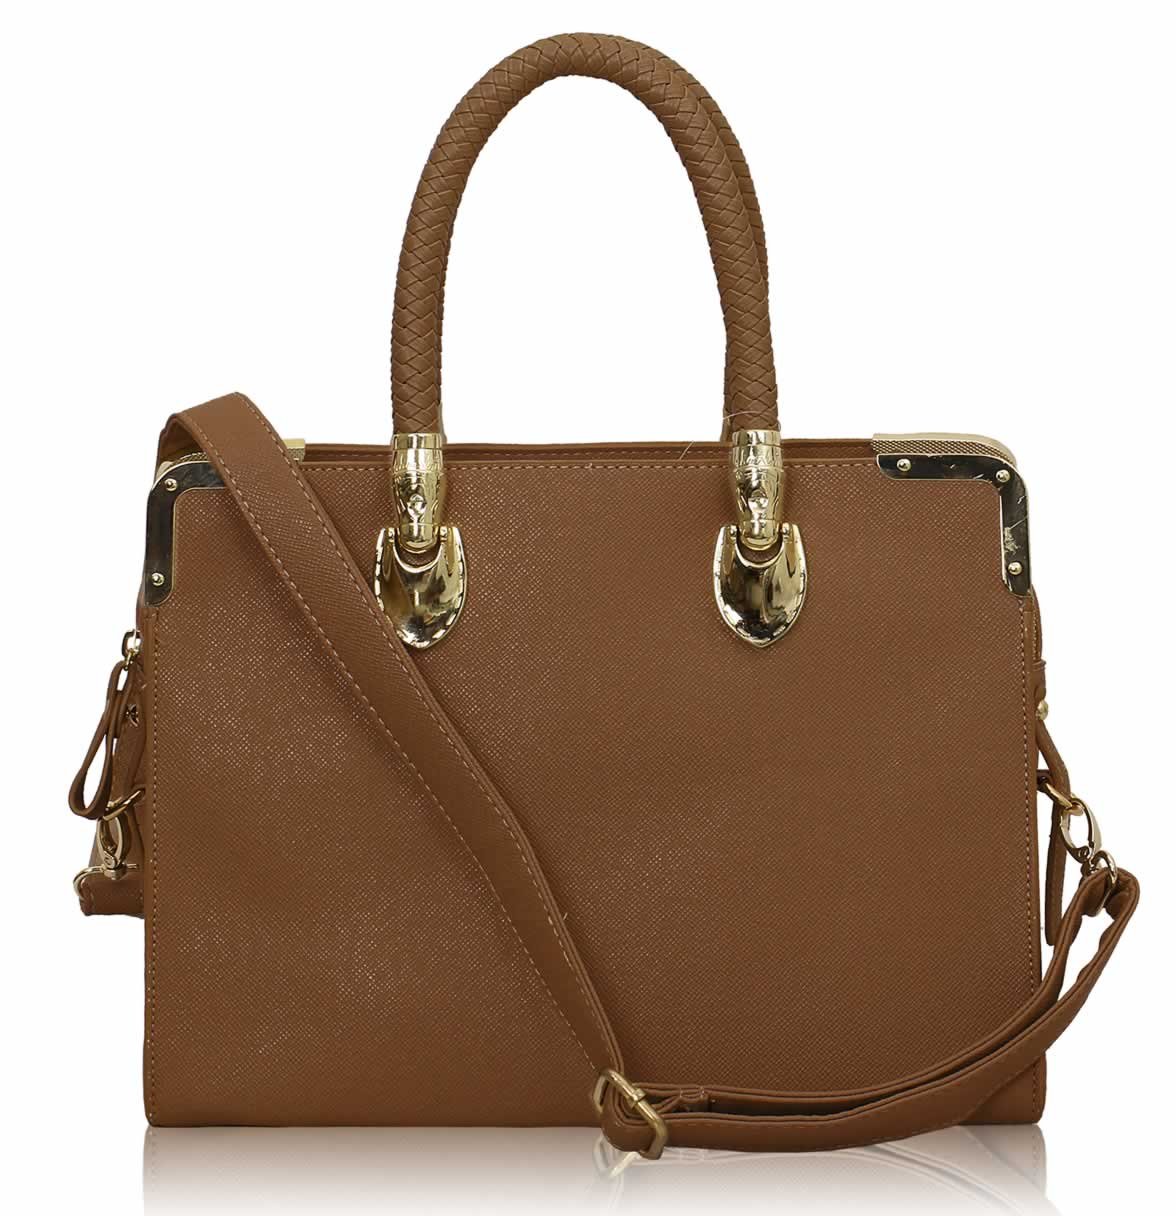 Wholesale Tan FashionTote Handbag